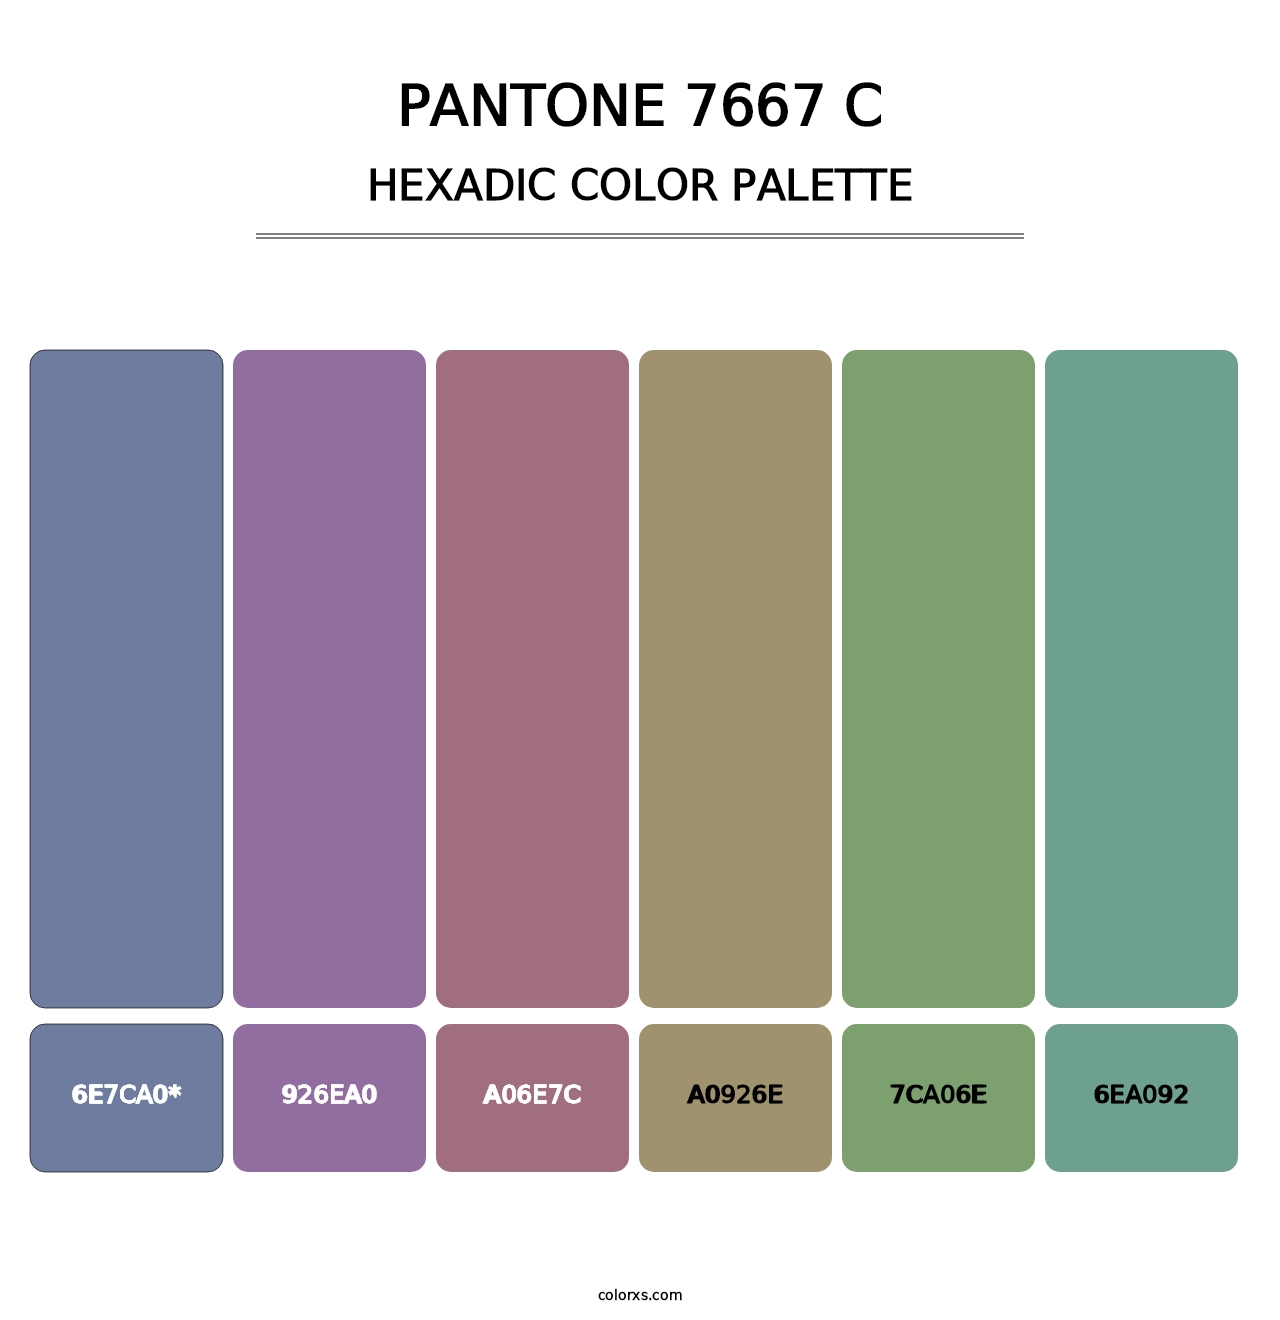 PANTONE 7667 C - Hexadic Color Palette